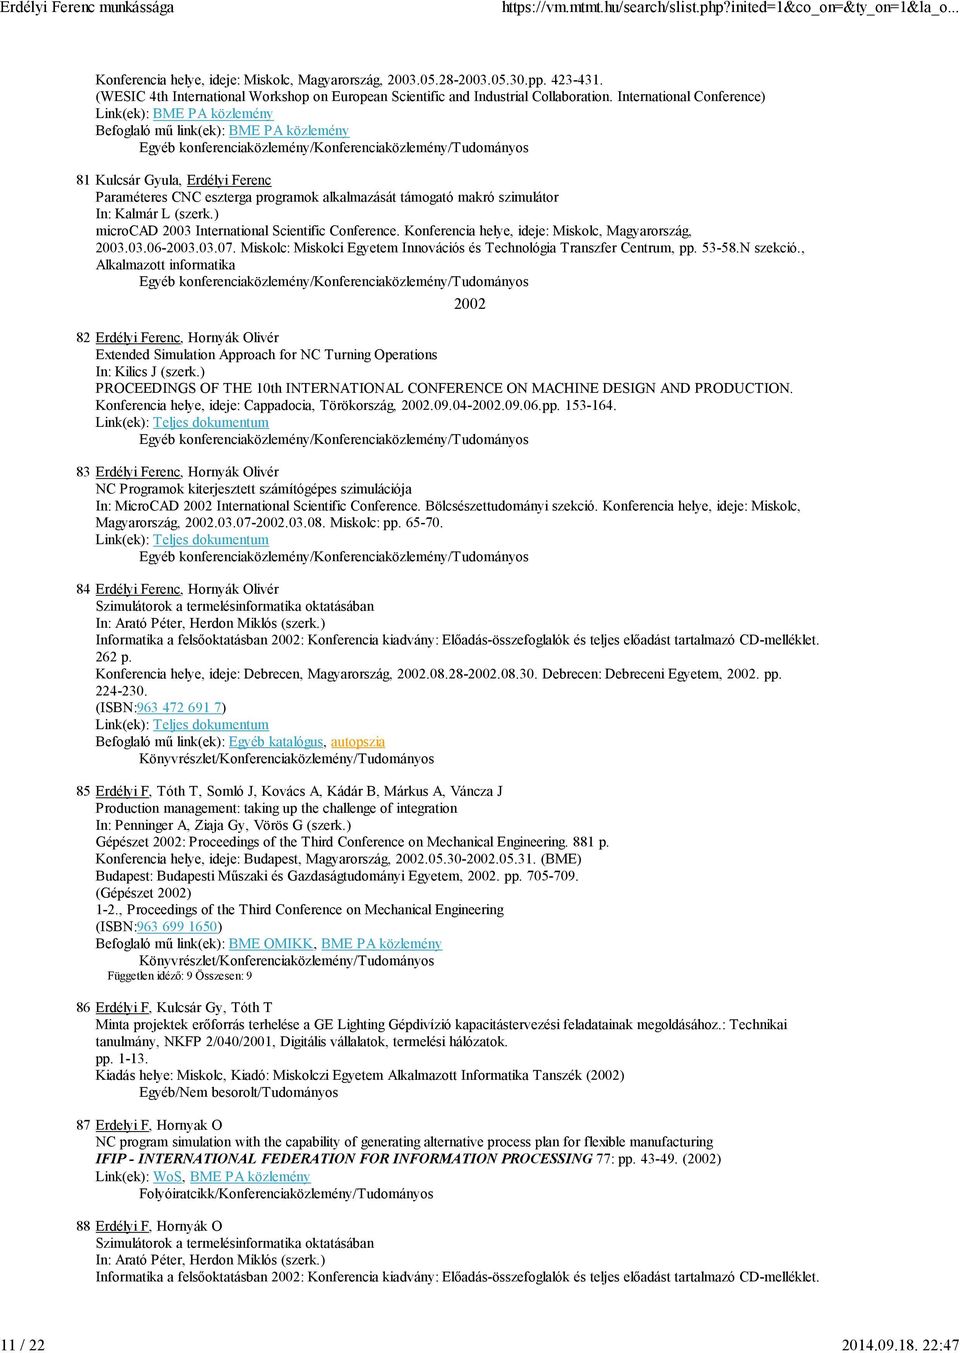 ) microcad 2003 International Scientific Conference. Konferencia helye, ideje: Miskolc, Magyarország, 2003.03.06-2003.03.07. Miskolc: Miskolci Egyetem Innovációs és Technológia Transzfer Centrum, pp.